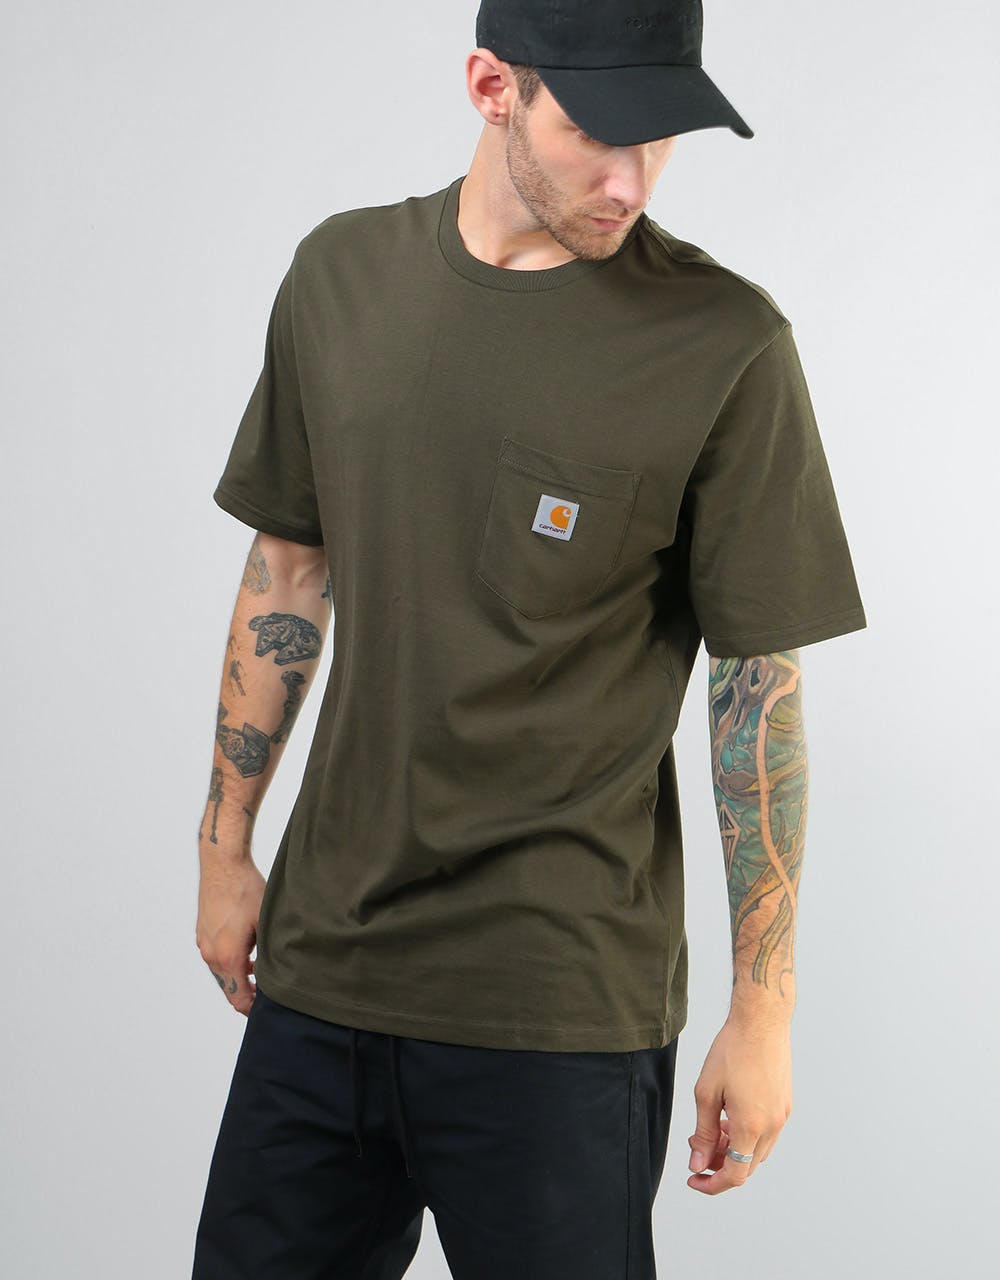 Carhartt WIP S/S Pocket T Shirt - Cypress